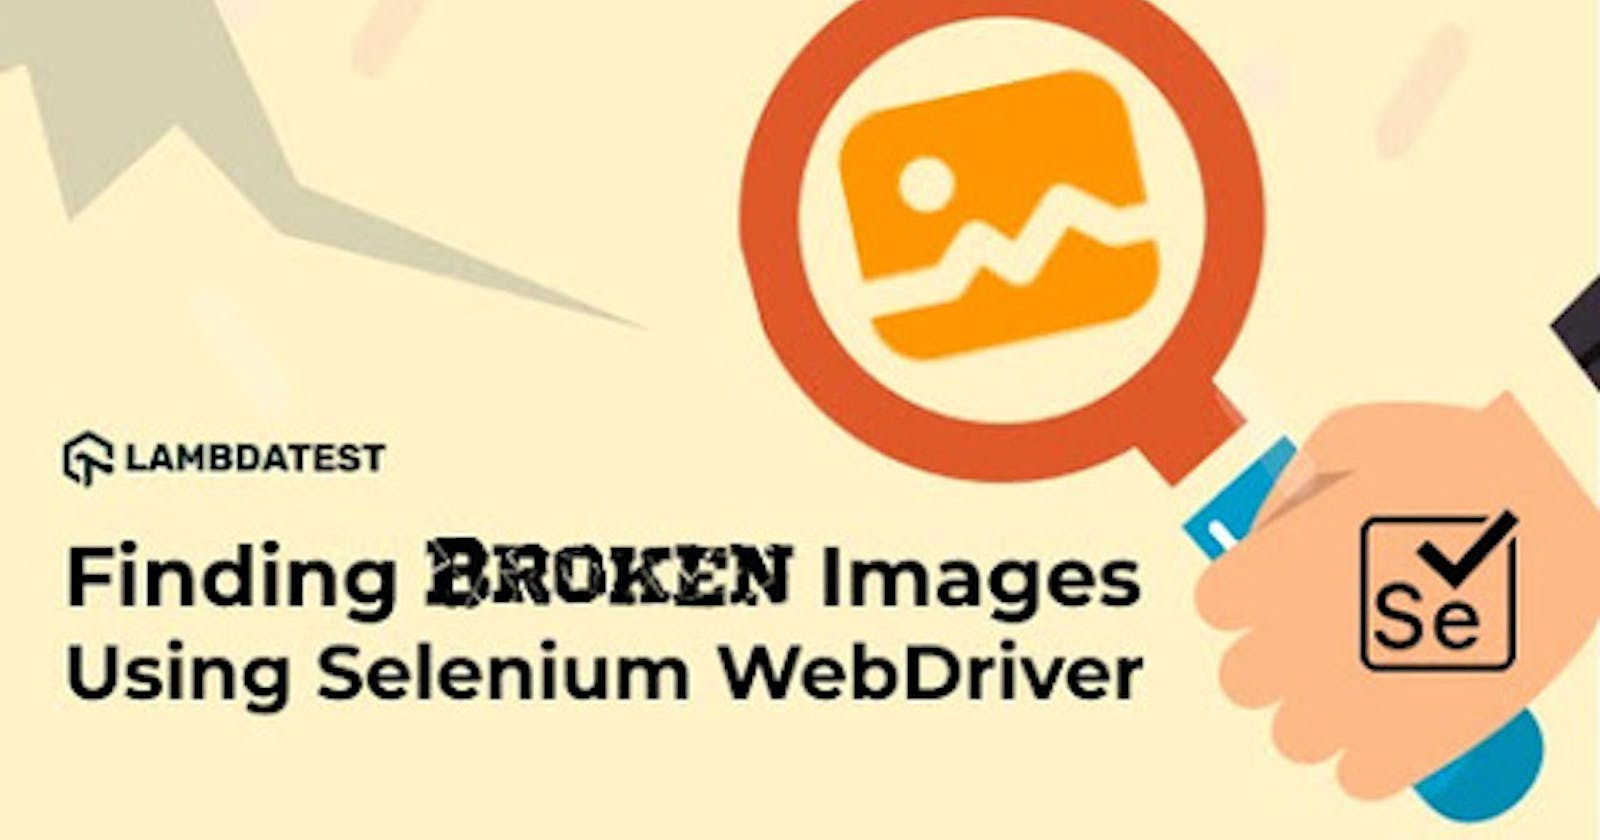 How To Find Broken Images Using Selenium WebDriver?